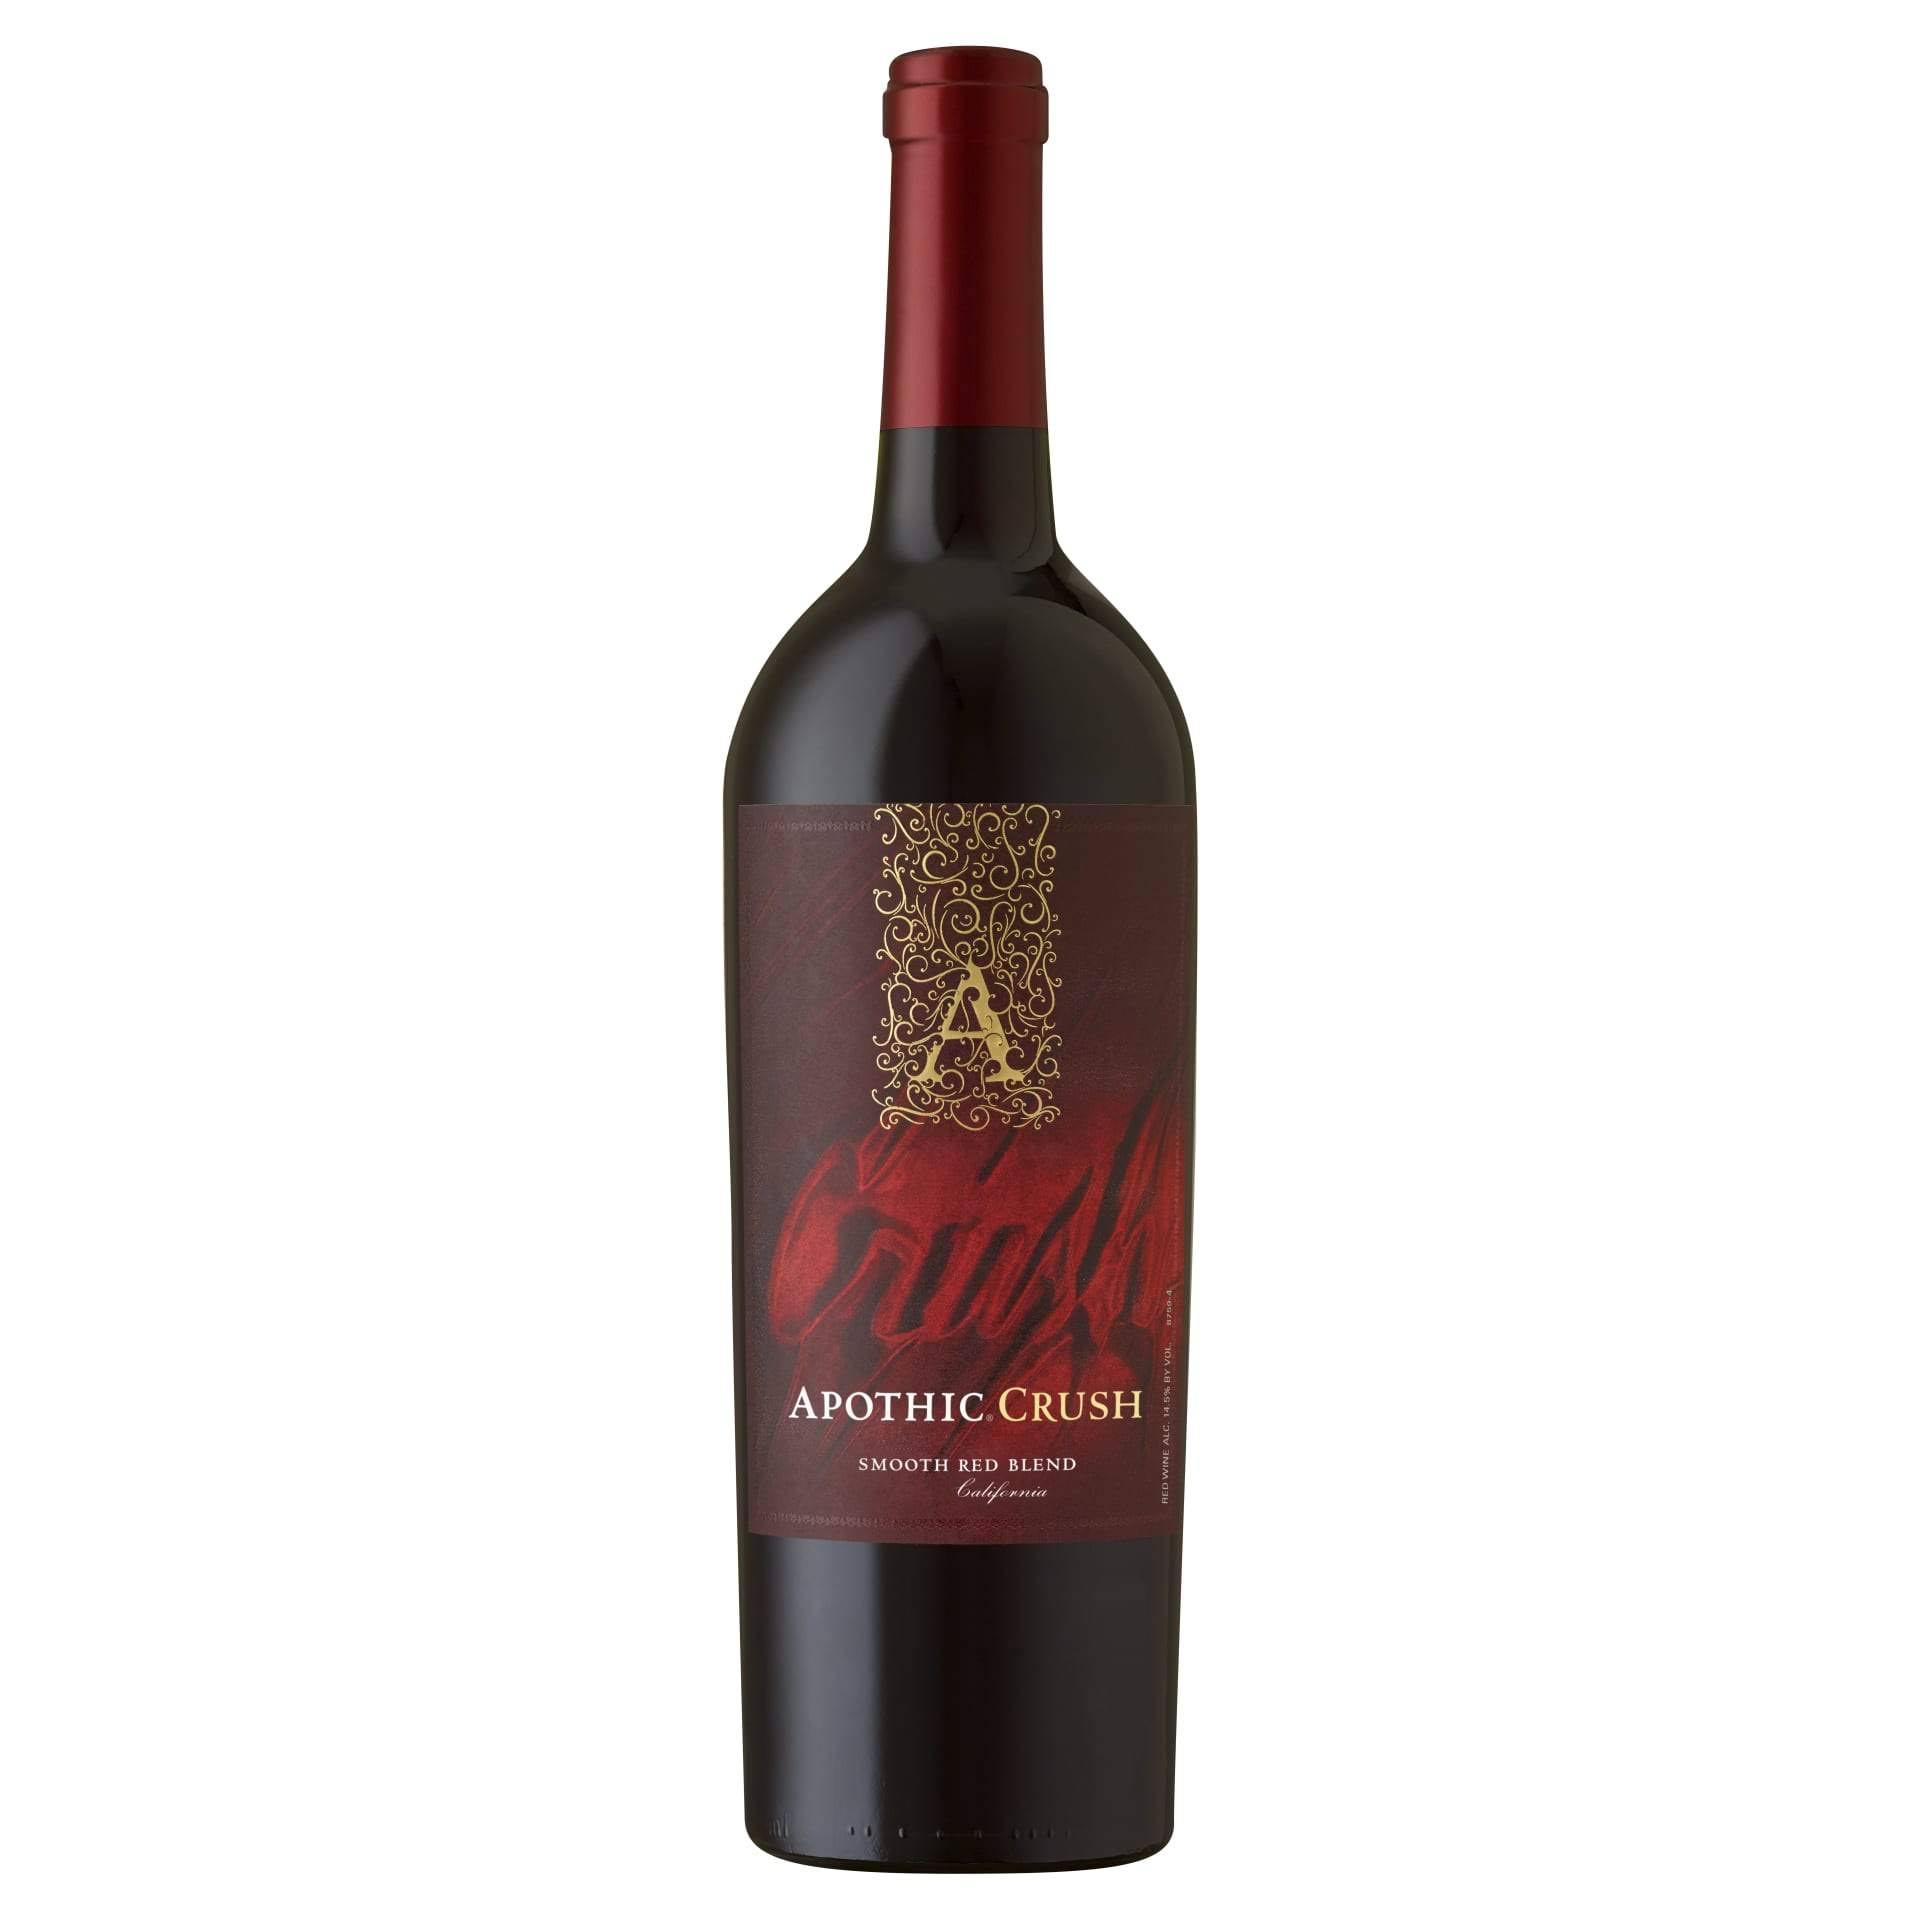 Apothic Crush Smooth Red Blend, California (Vintage Varies) - 750 ml bottle